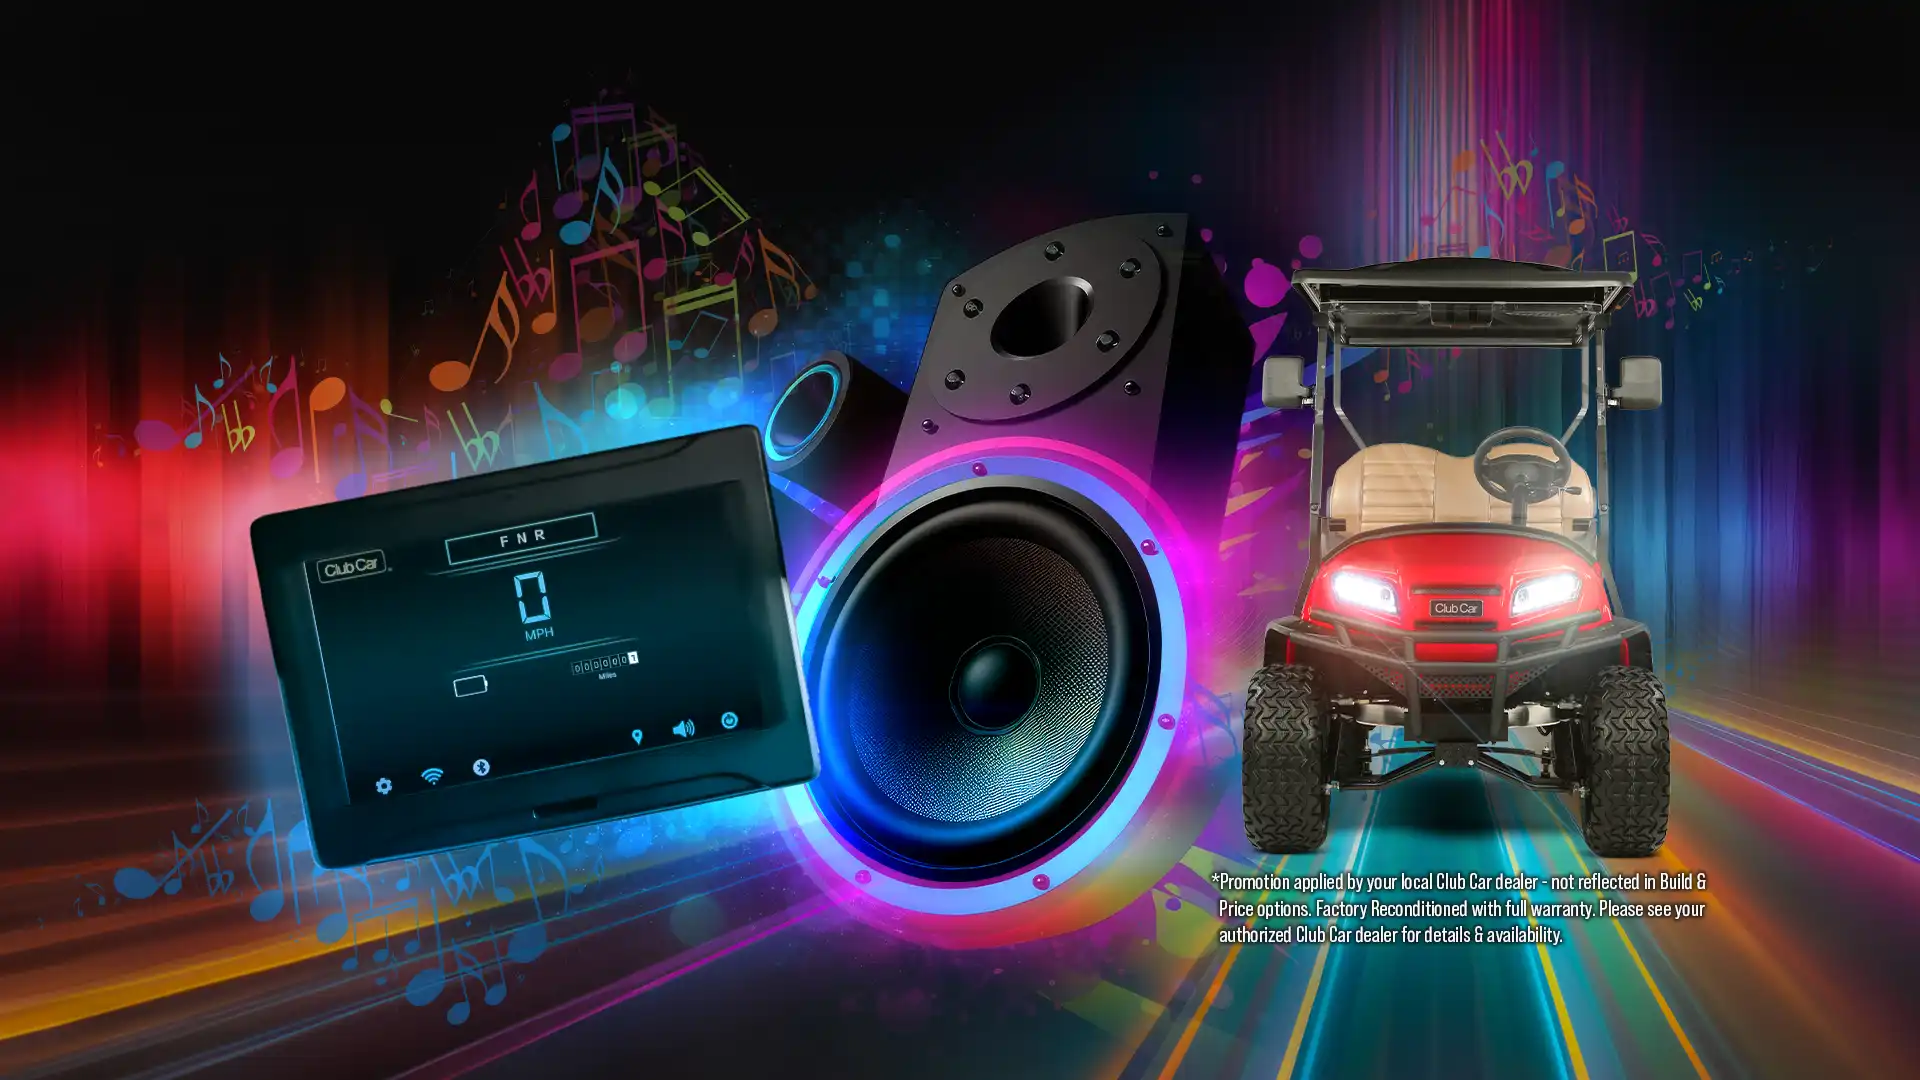 Onward Digital Display and Bluetooth Music System offer